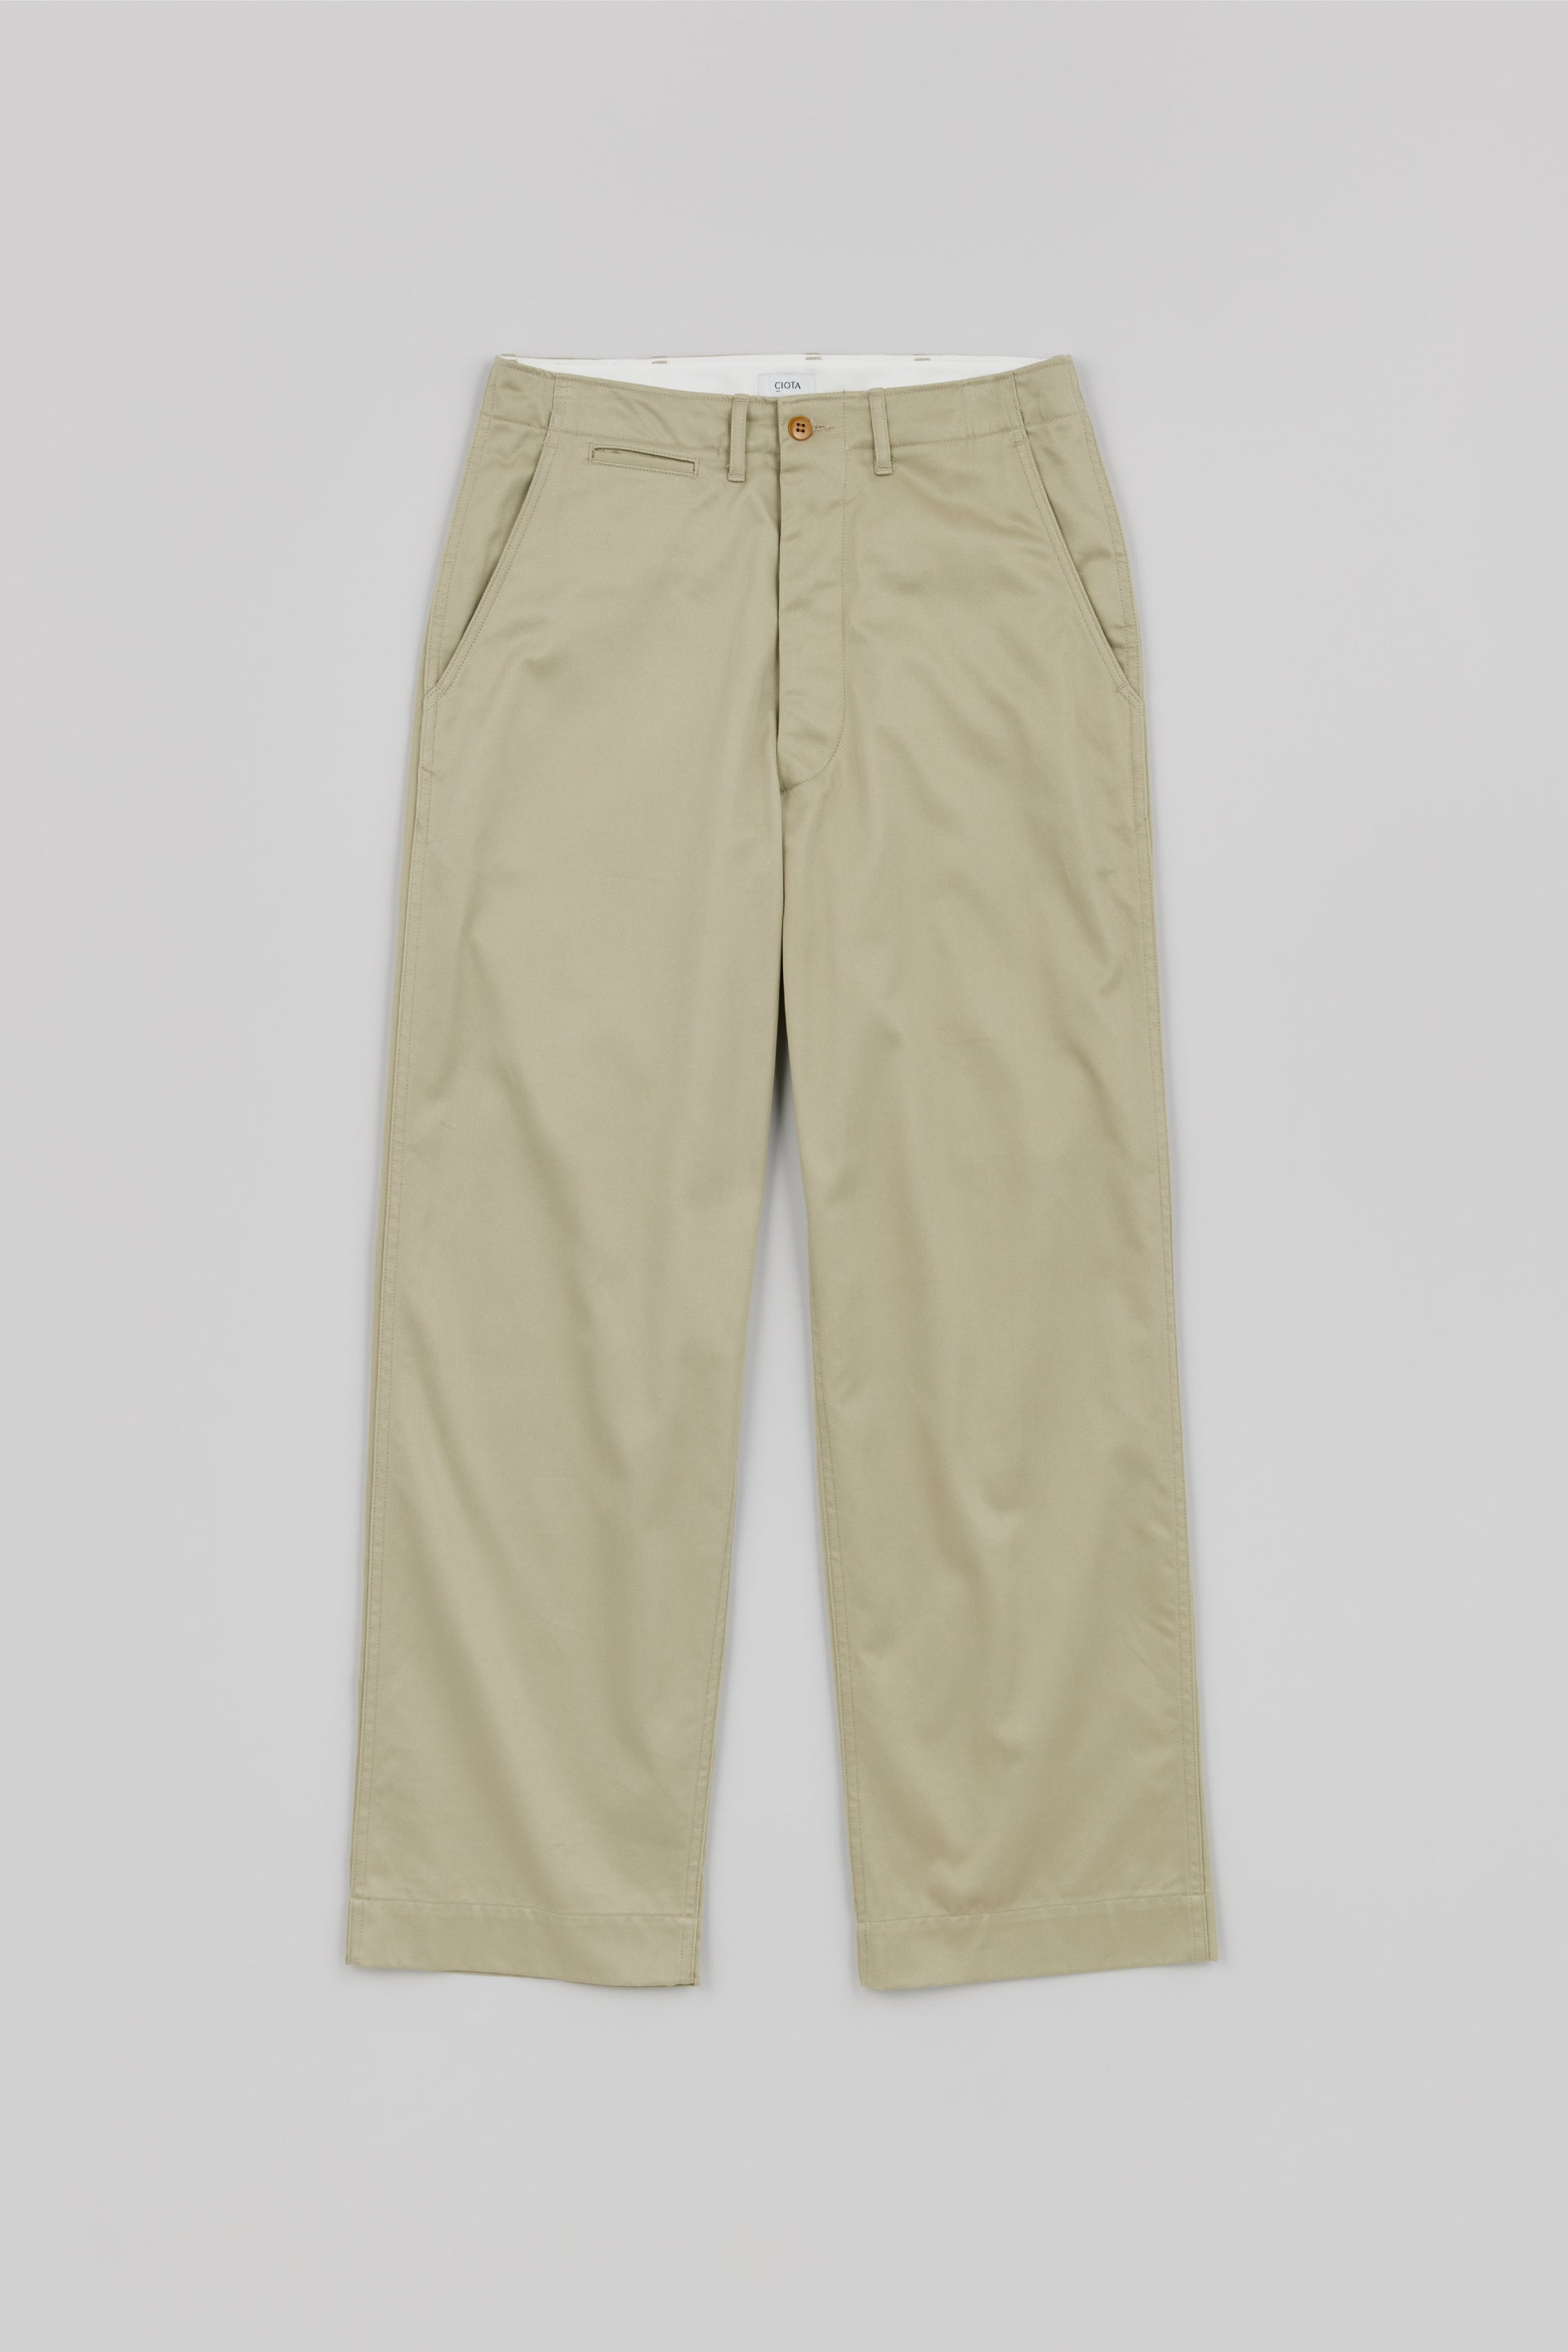 Weapon Chino Cloth Pants(45 khaki)